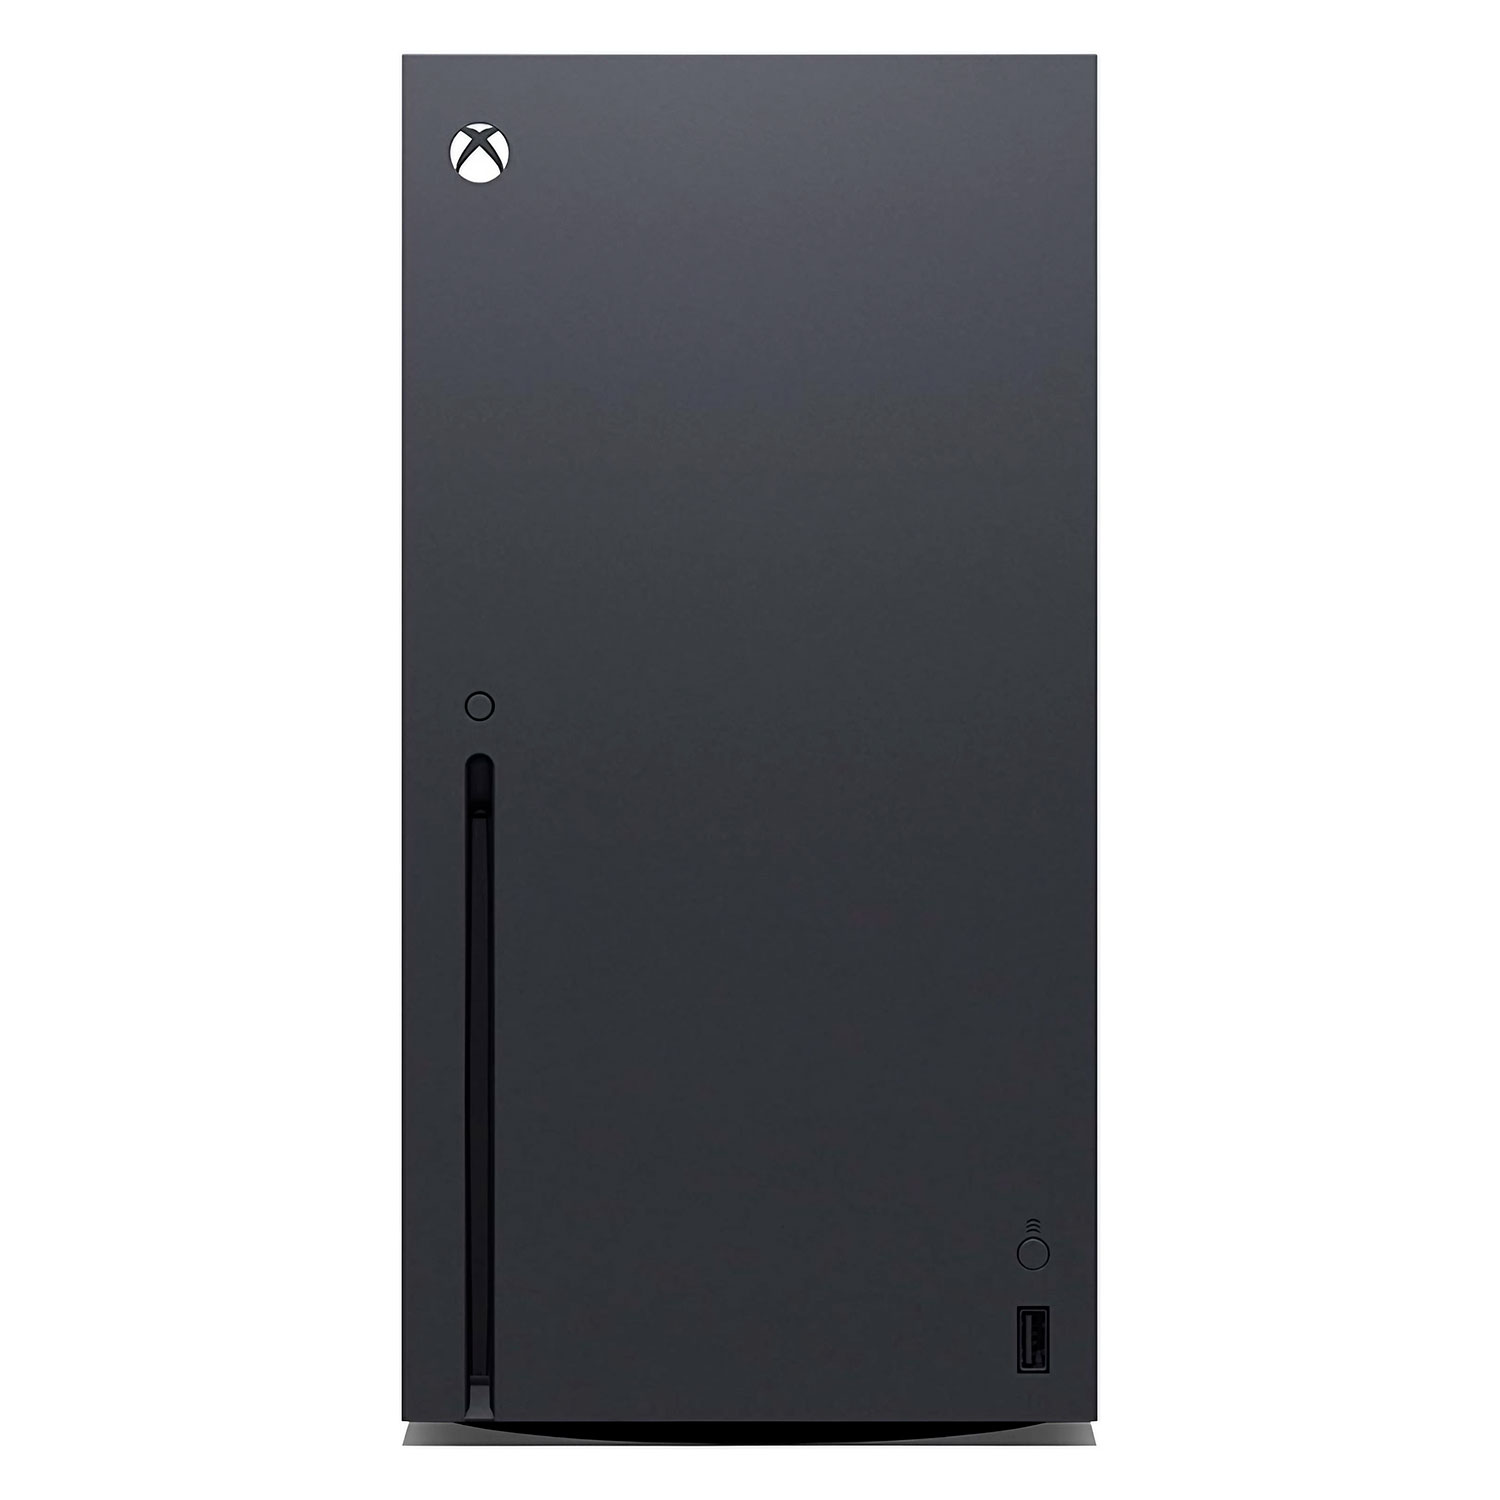 Console Xbox Series X 1TB Diablo IV Bundle Japão - Preto (Caixa Danificada)